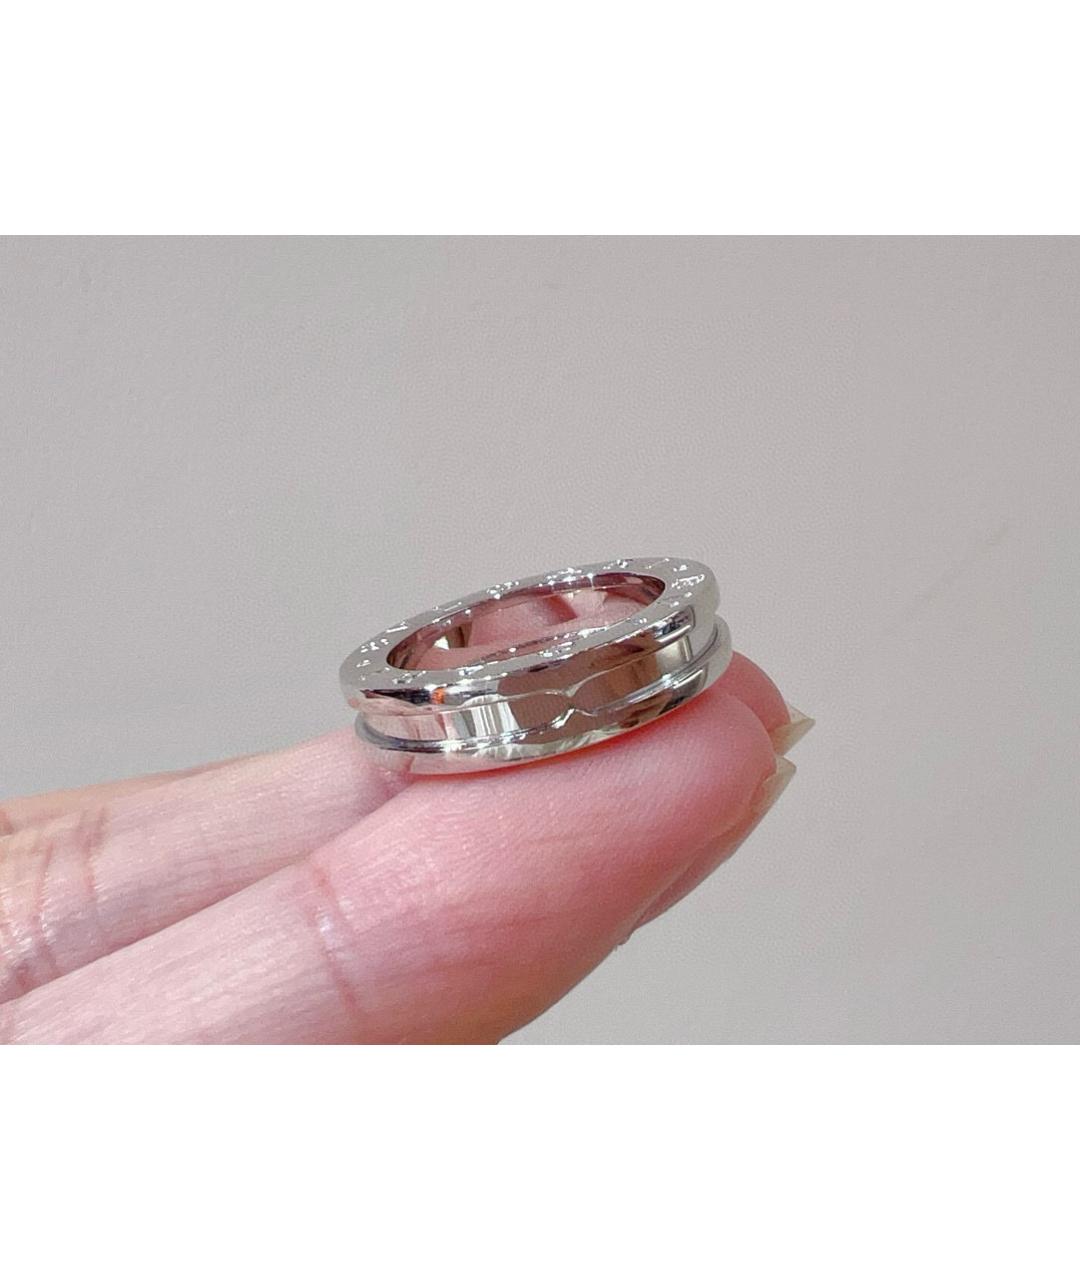 BVLGARI Белое кольцо из белого золота, фото 2